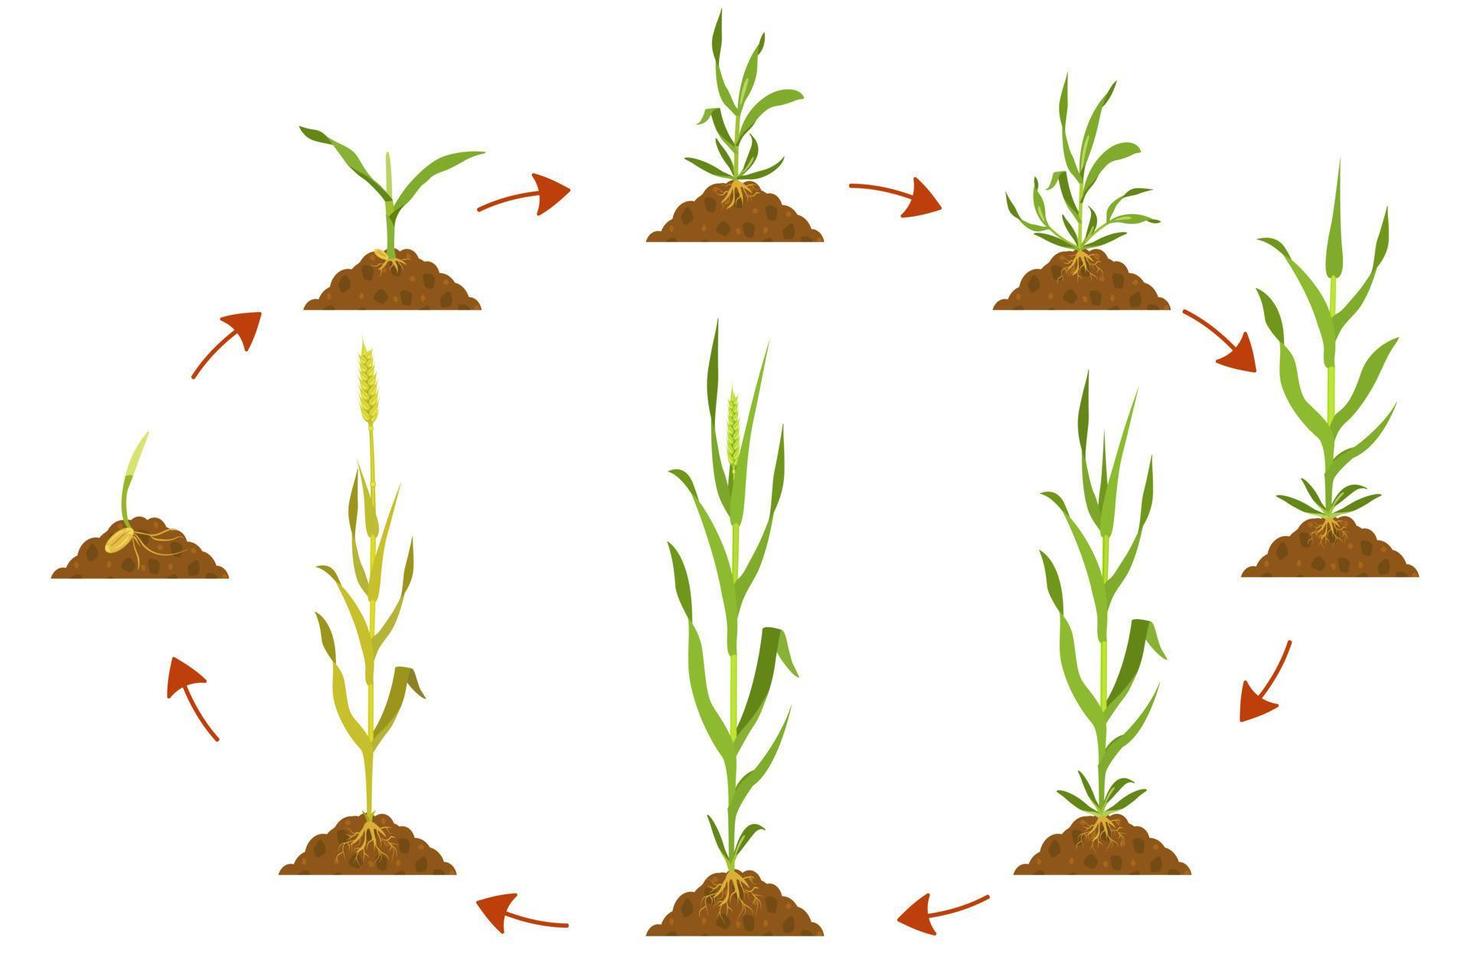 cyclus groei tarwe in de landbouw. tarwe ontwikkelingscyclus infographic. vector